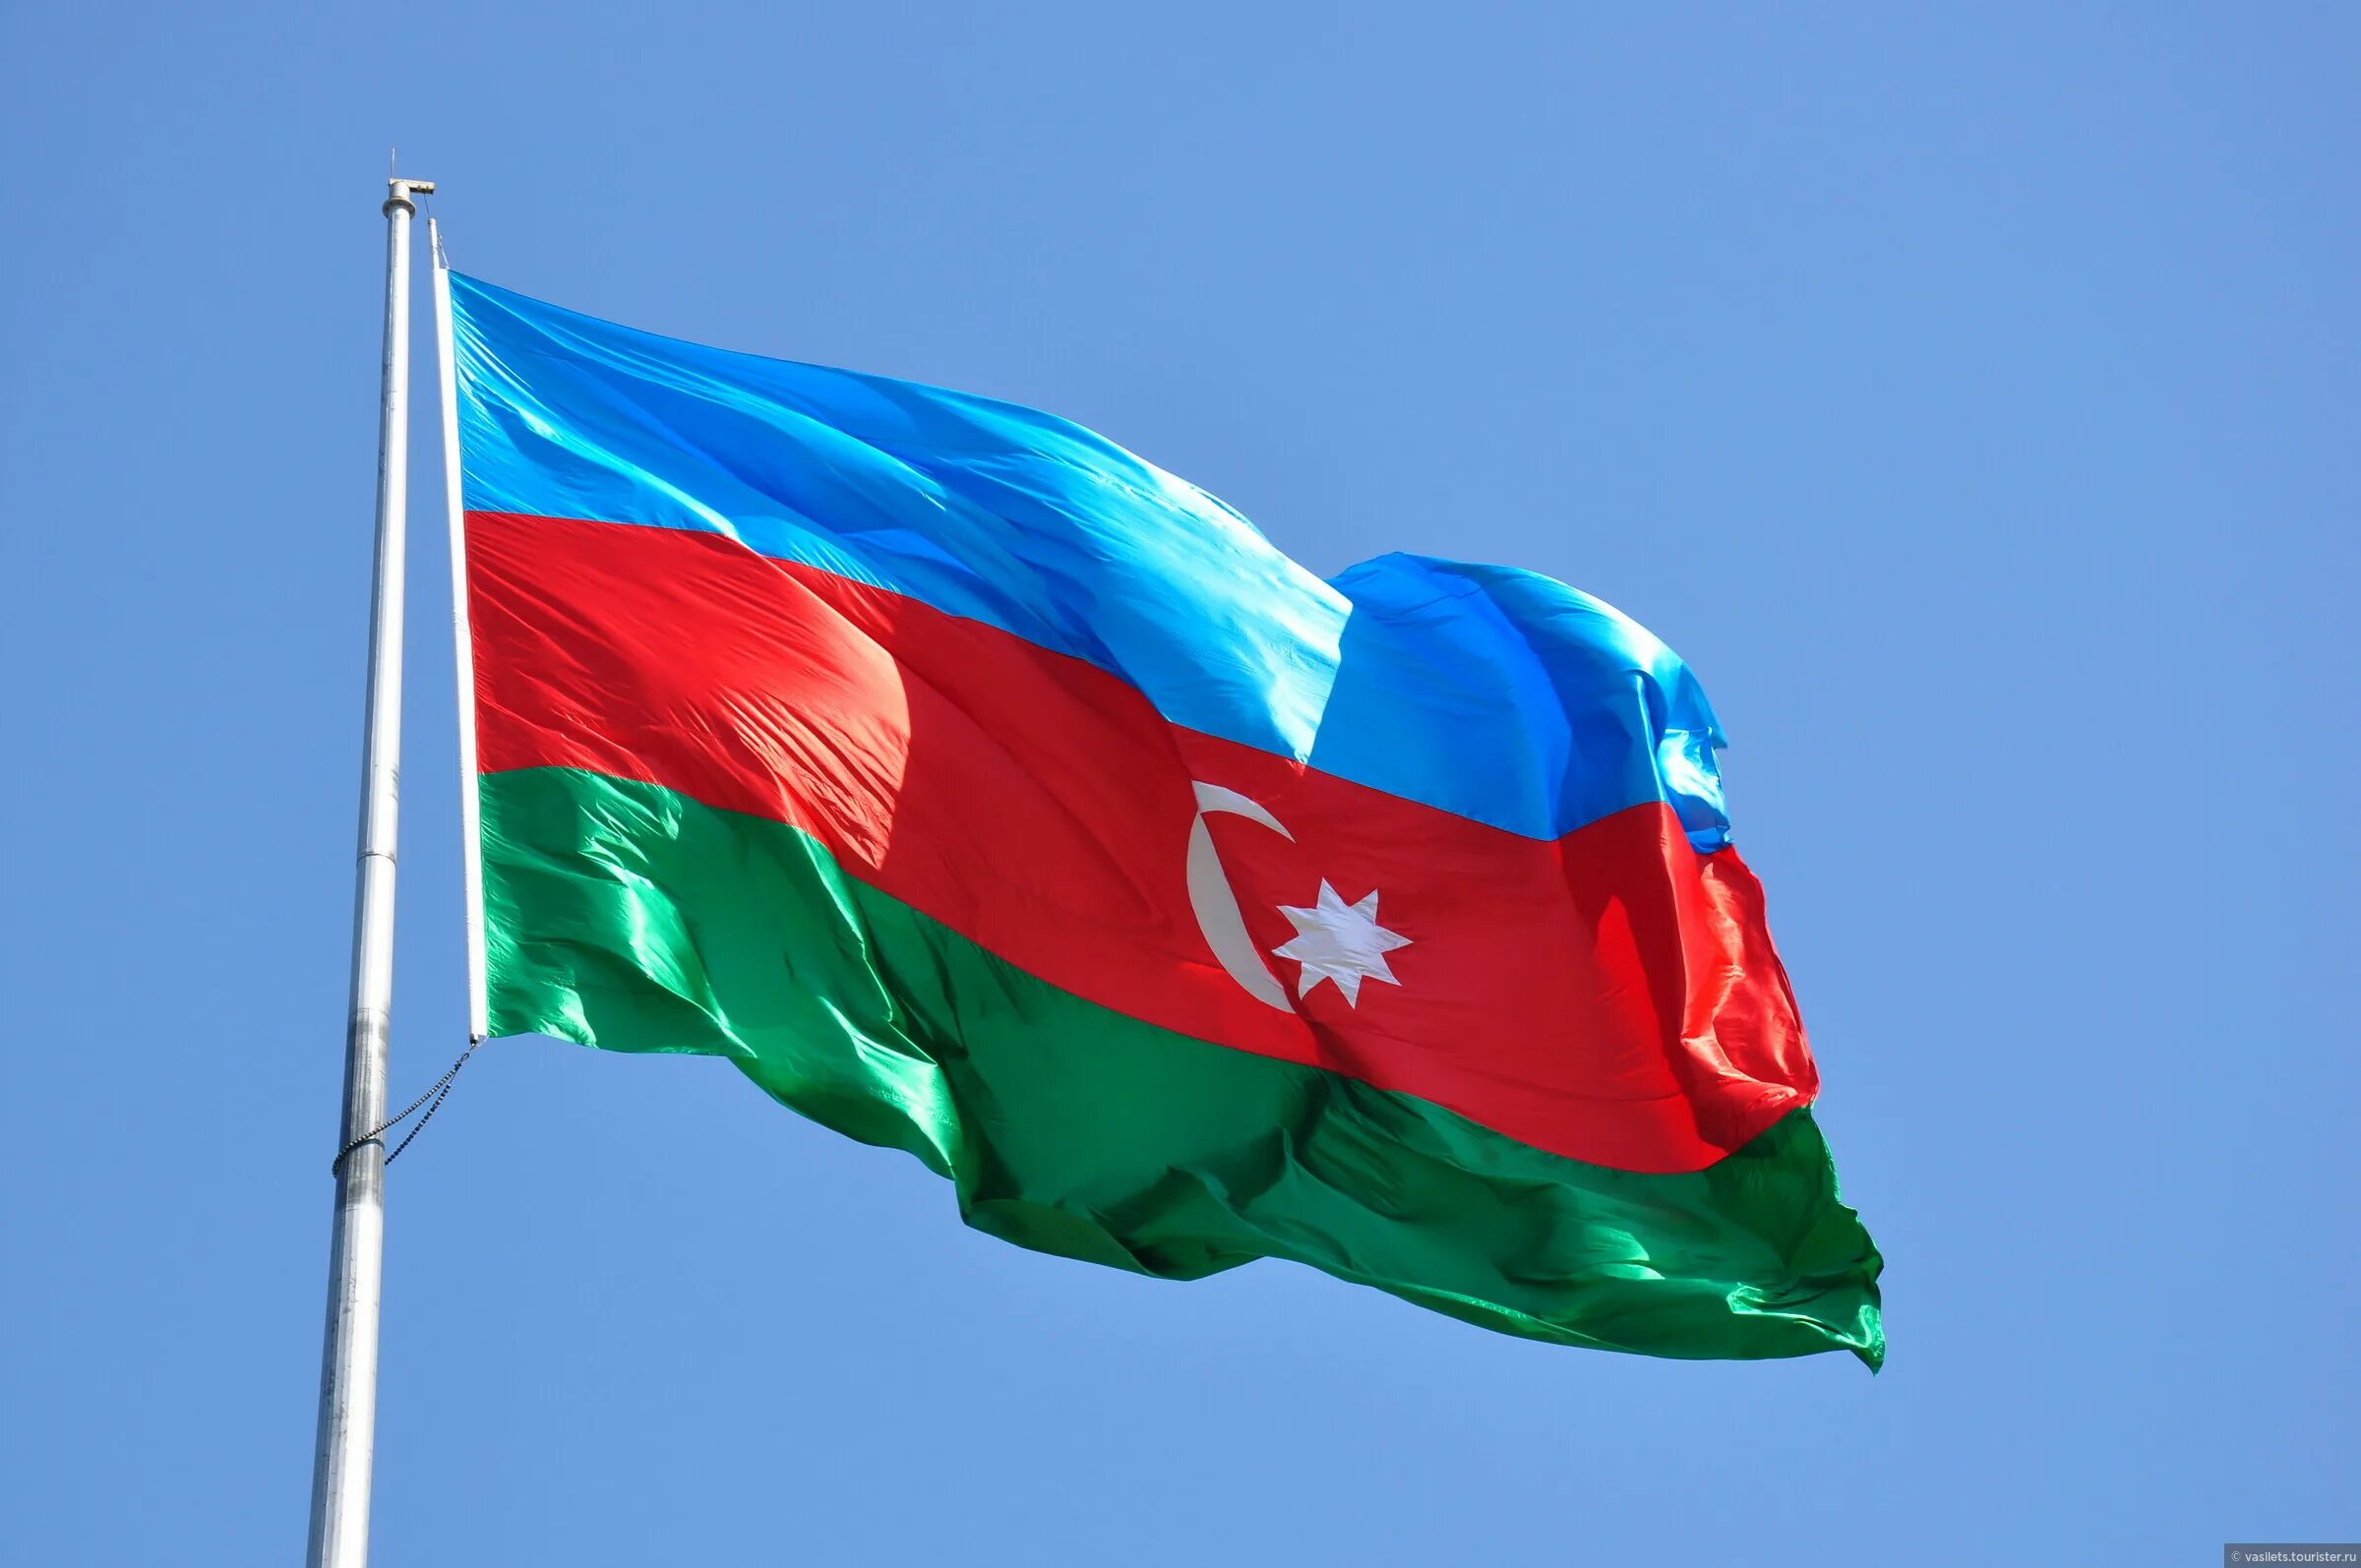 Азербайджан азер. Республика Азербайджан флаг. Азербайджан bayraq. Национальный флаг Азербайджана. Развивающийся флаг Азербайджана.